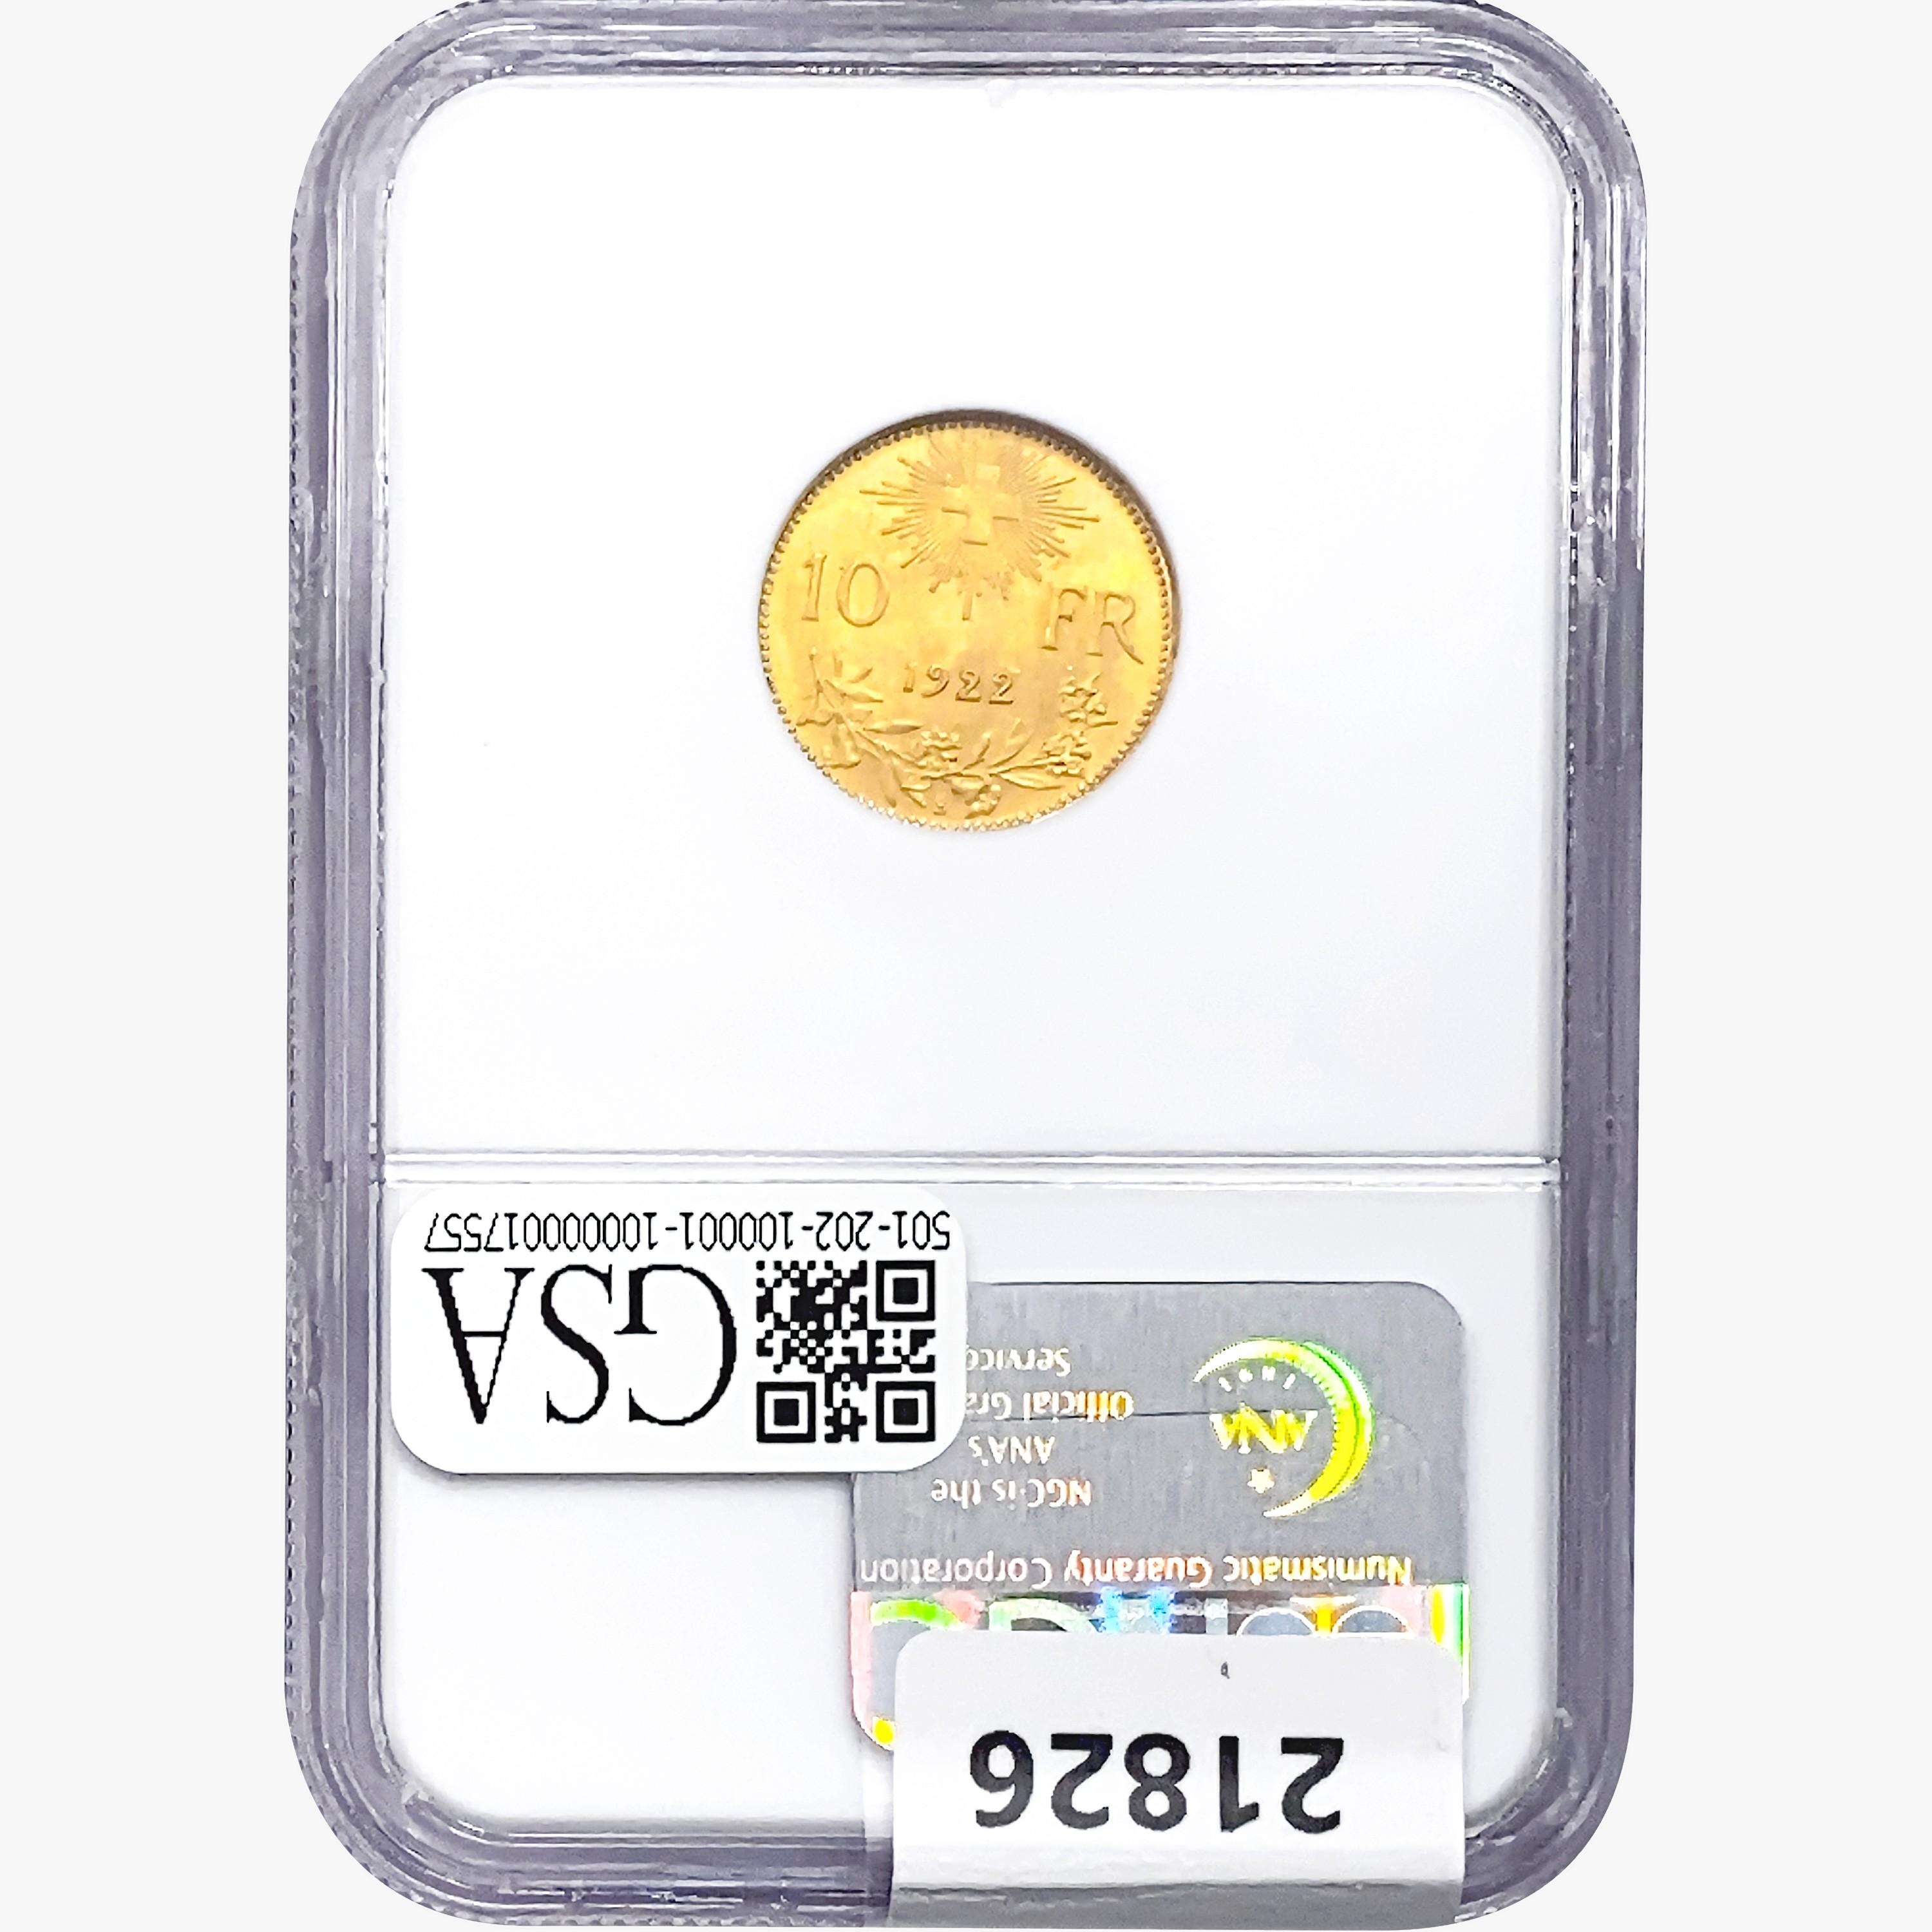 1922 .0933oz. Gold Swizerland 10 Francs NGC MS66